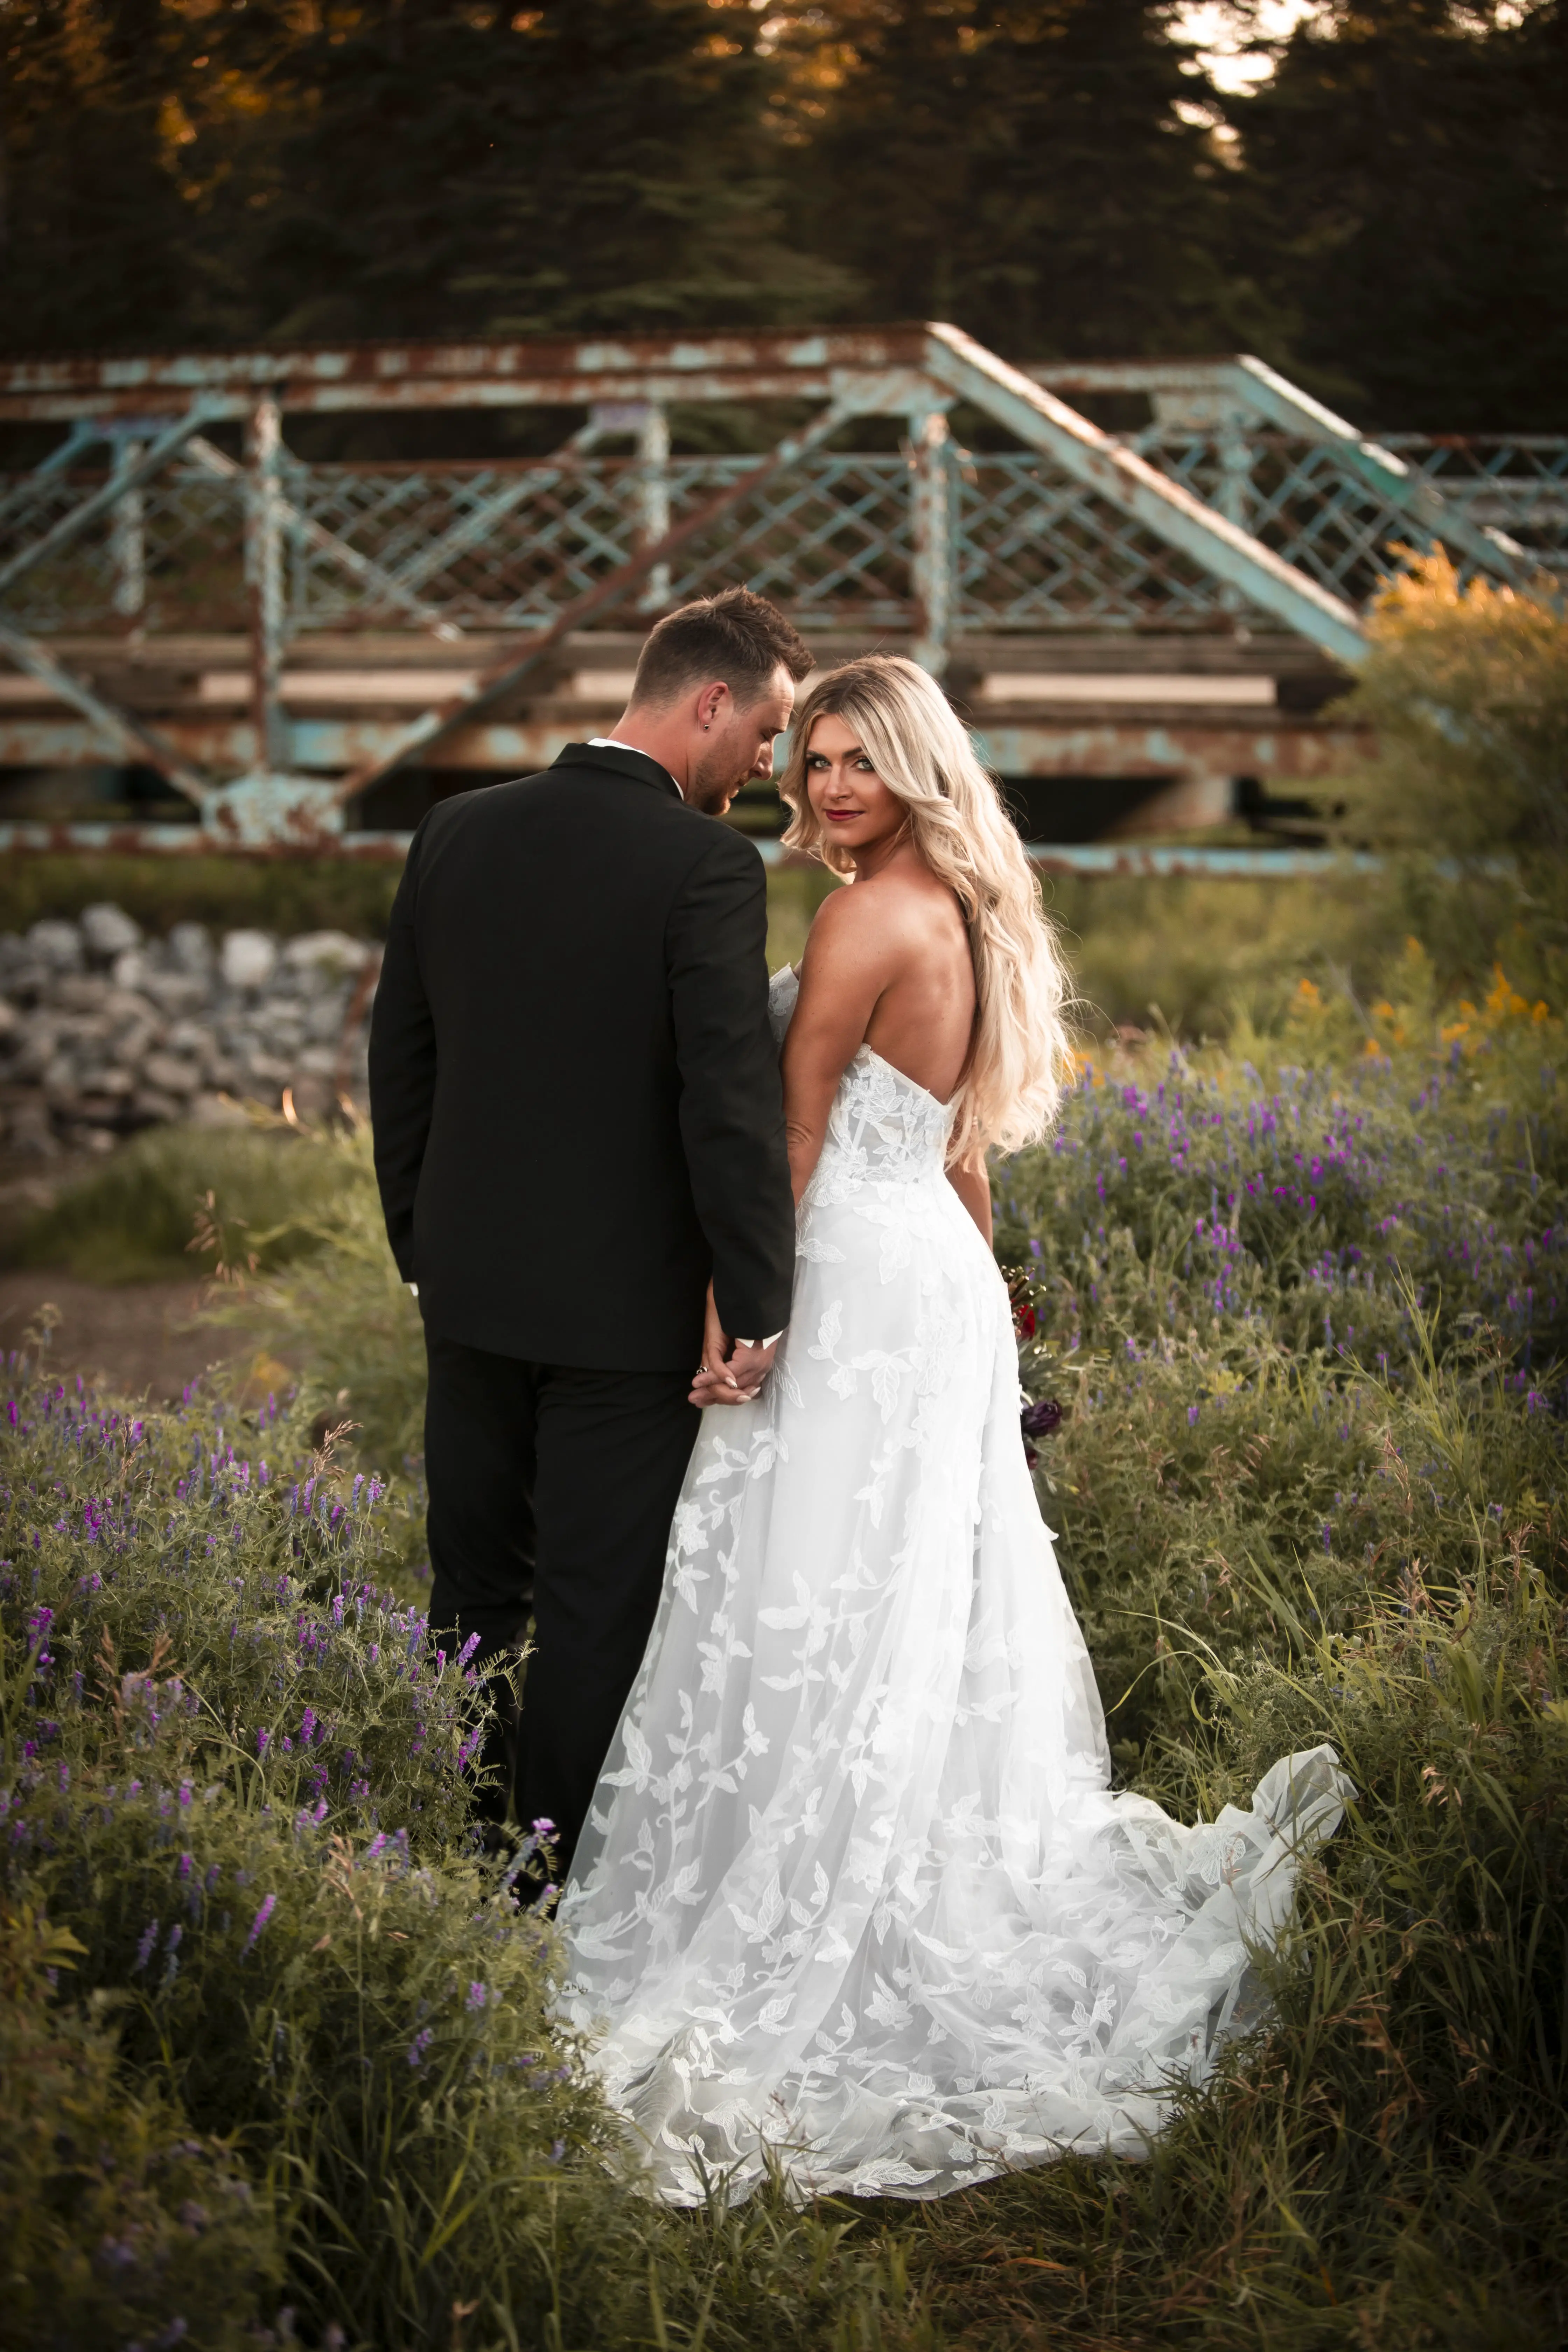 Briar Rose Photography & Design - Edmonton & Whitehorse Wedding Photographer